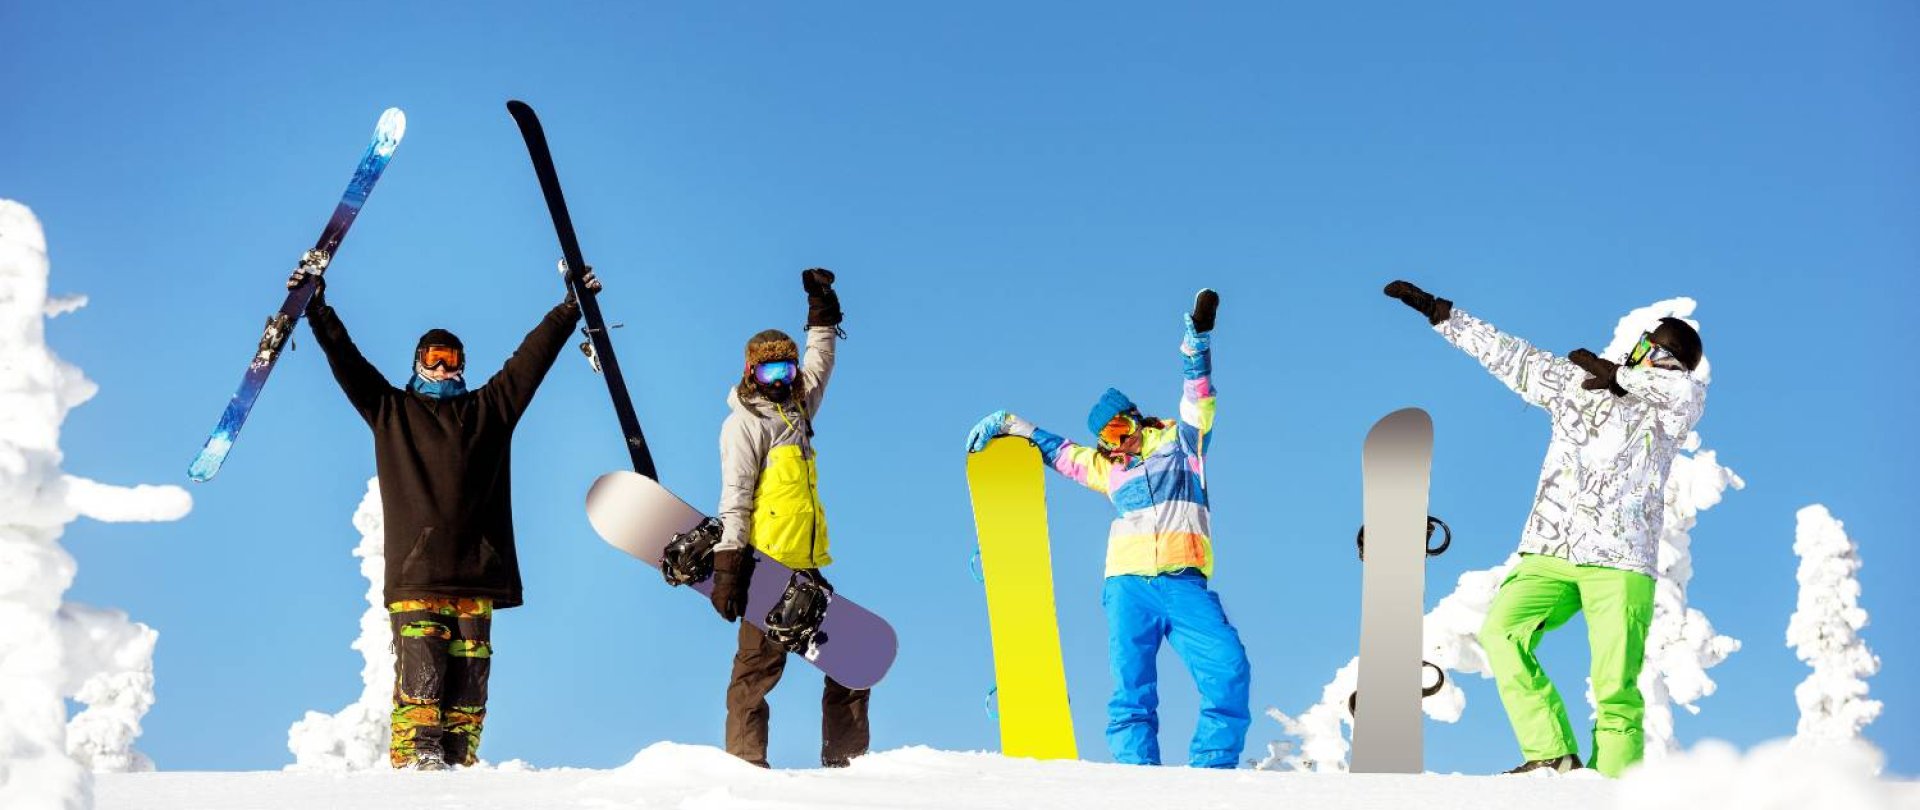 How to Prepare for the Ski Season?